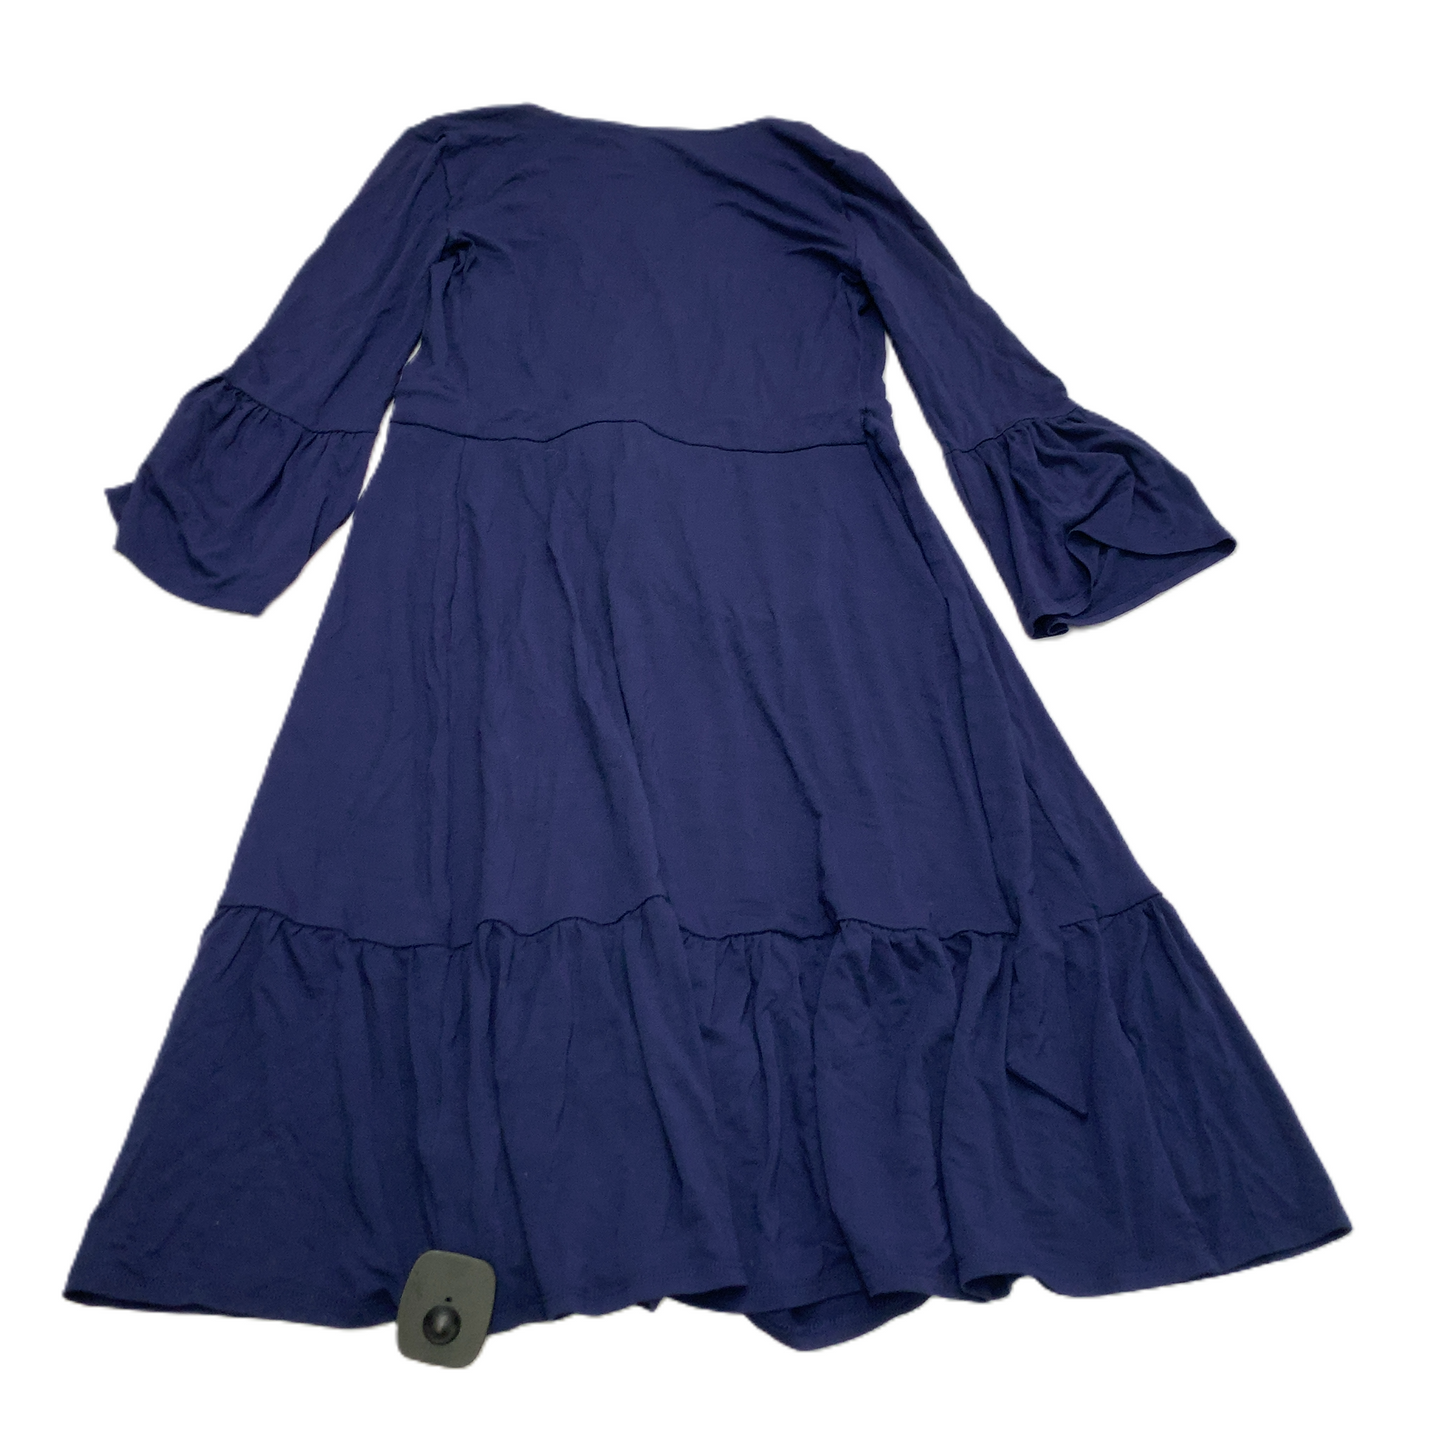 Blue  Dress Designer By Lilly Pulitzer  Size: Xxs